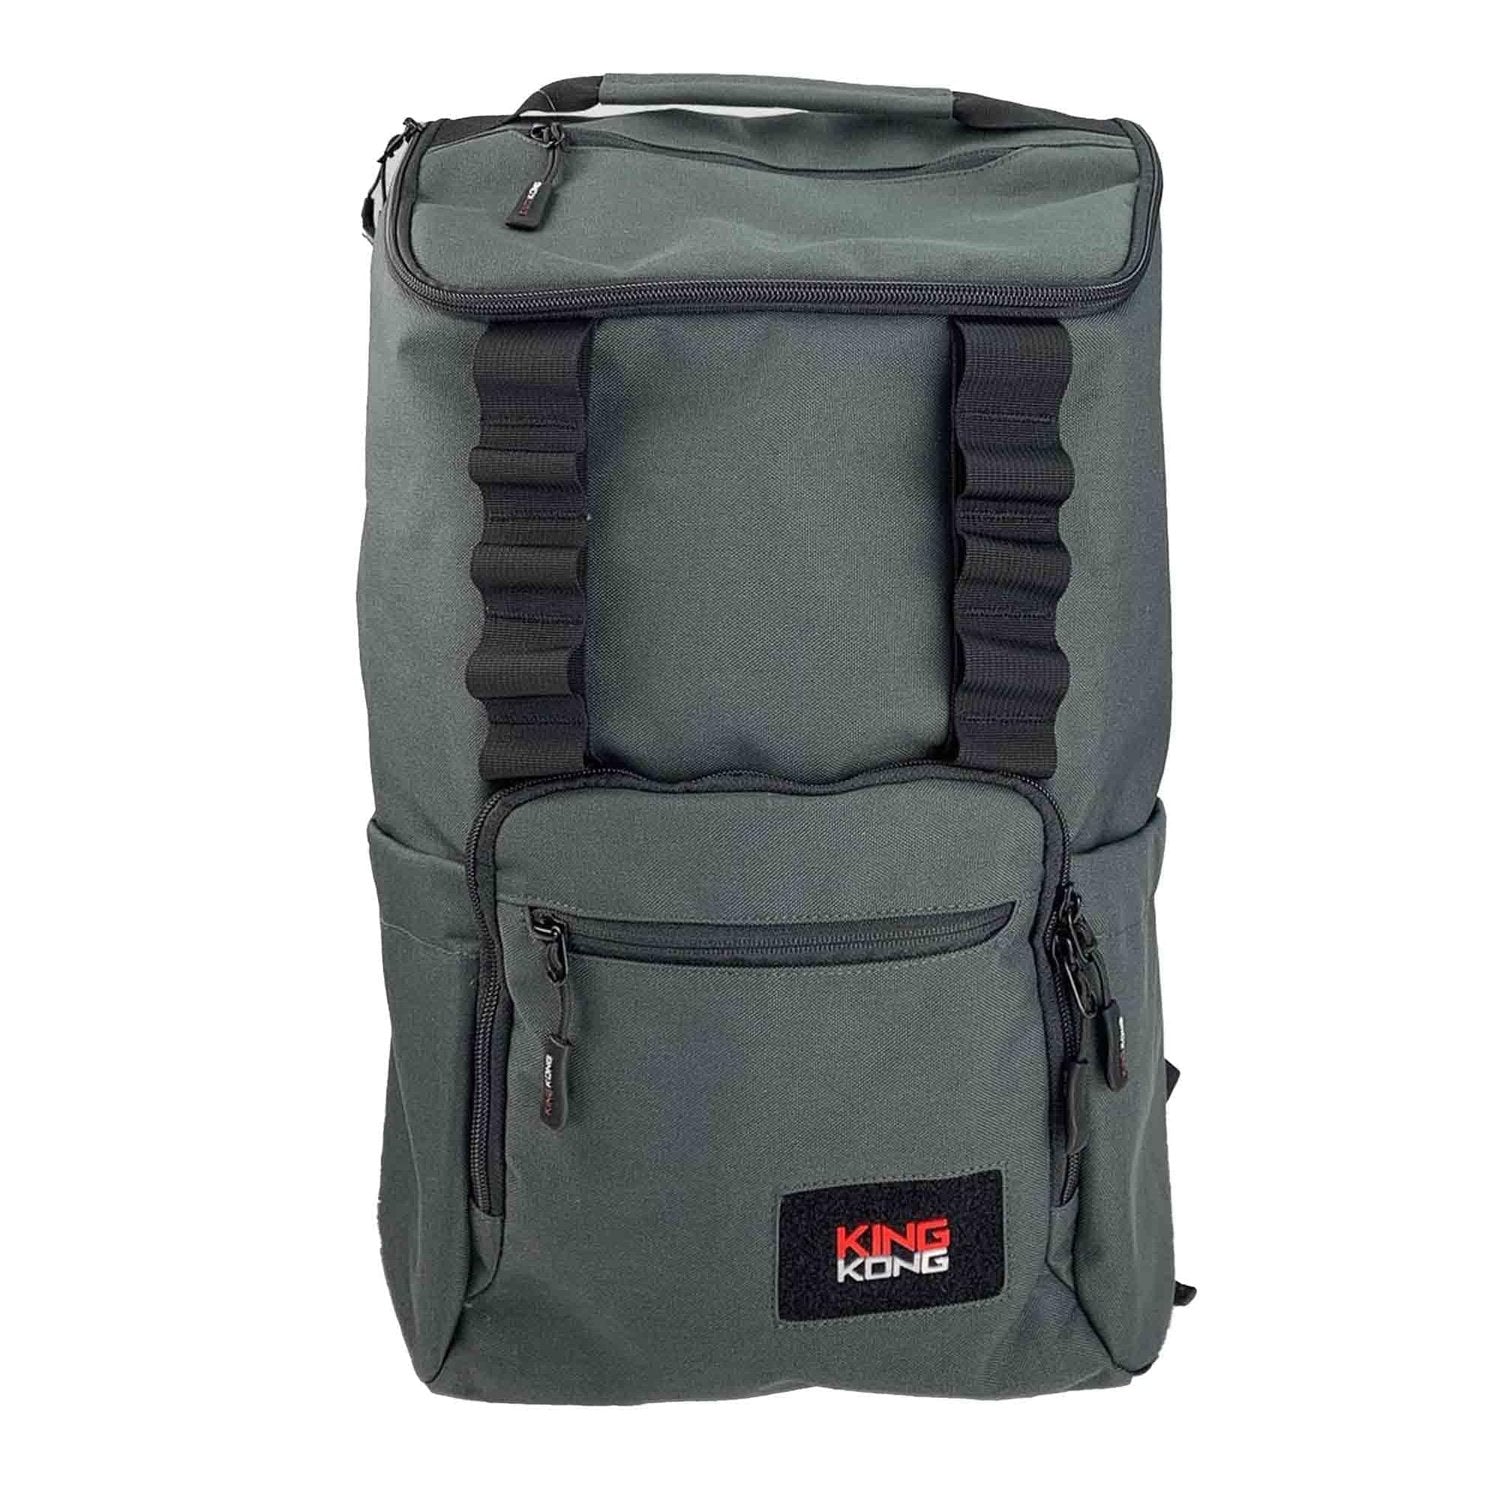 King Kong Bags King Kong CORE Backpack Charcoal 25l kaufen bei HighPowered.ch